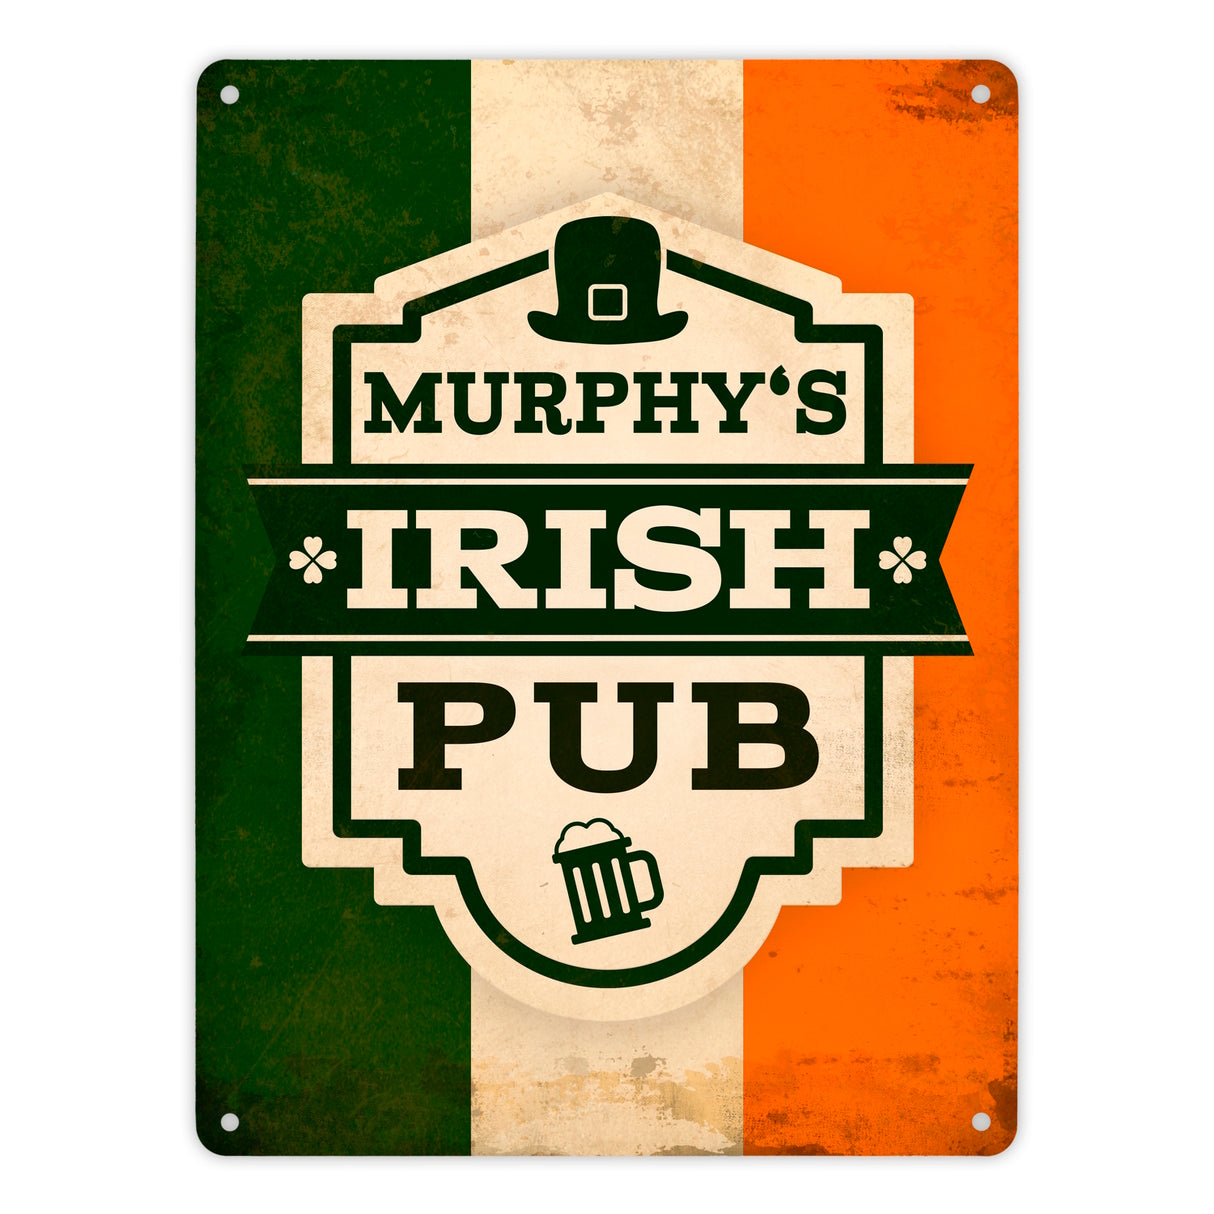 Metallschild mit Murphy's Irish Pub Motiv